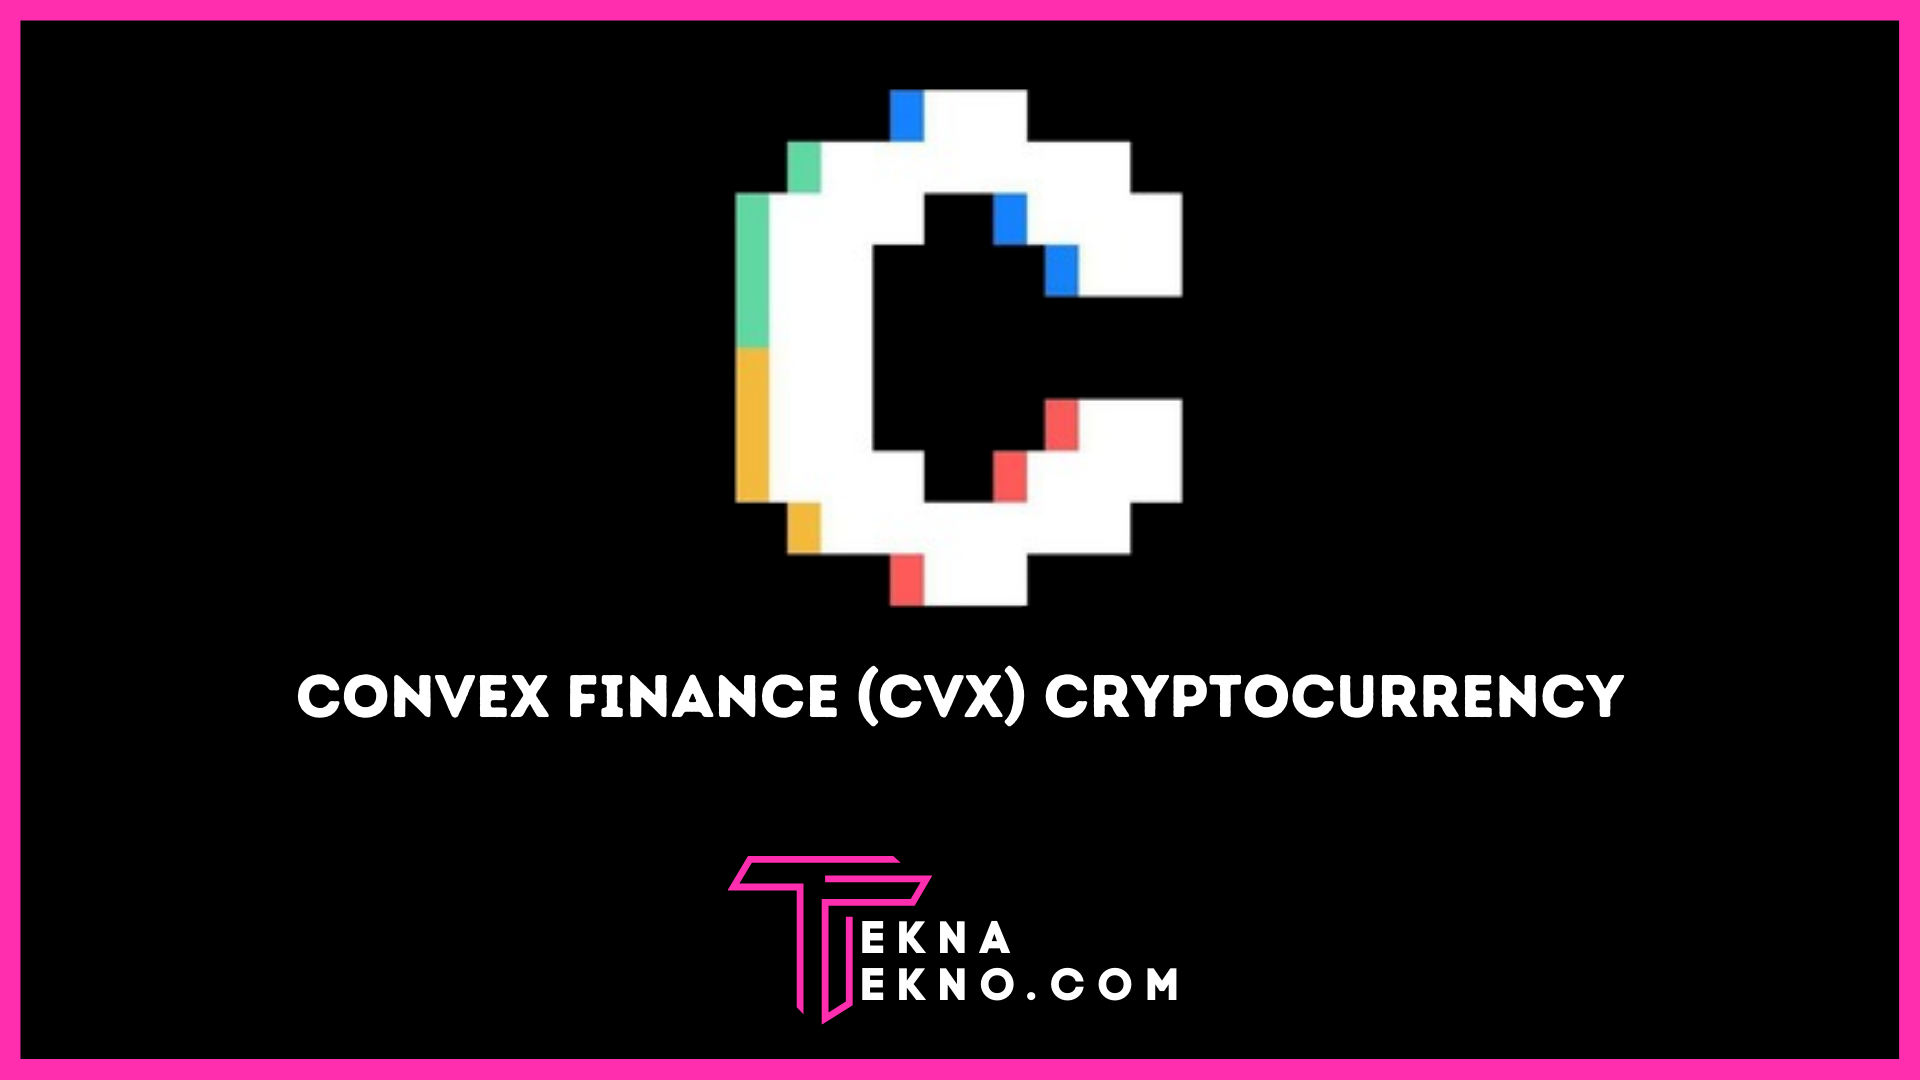 Convex Finance (CVX) Cryptocurrency: Pengertian dan Harga